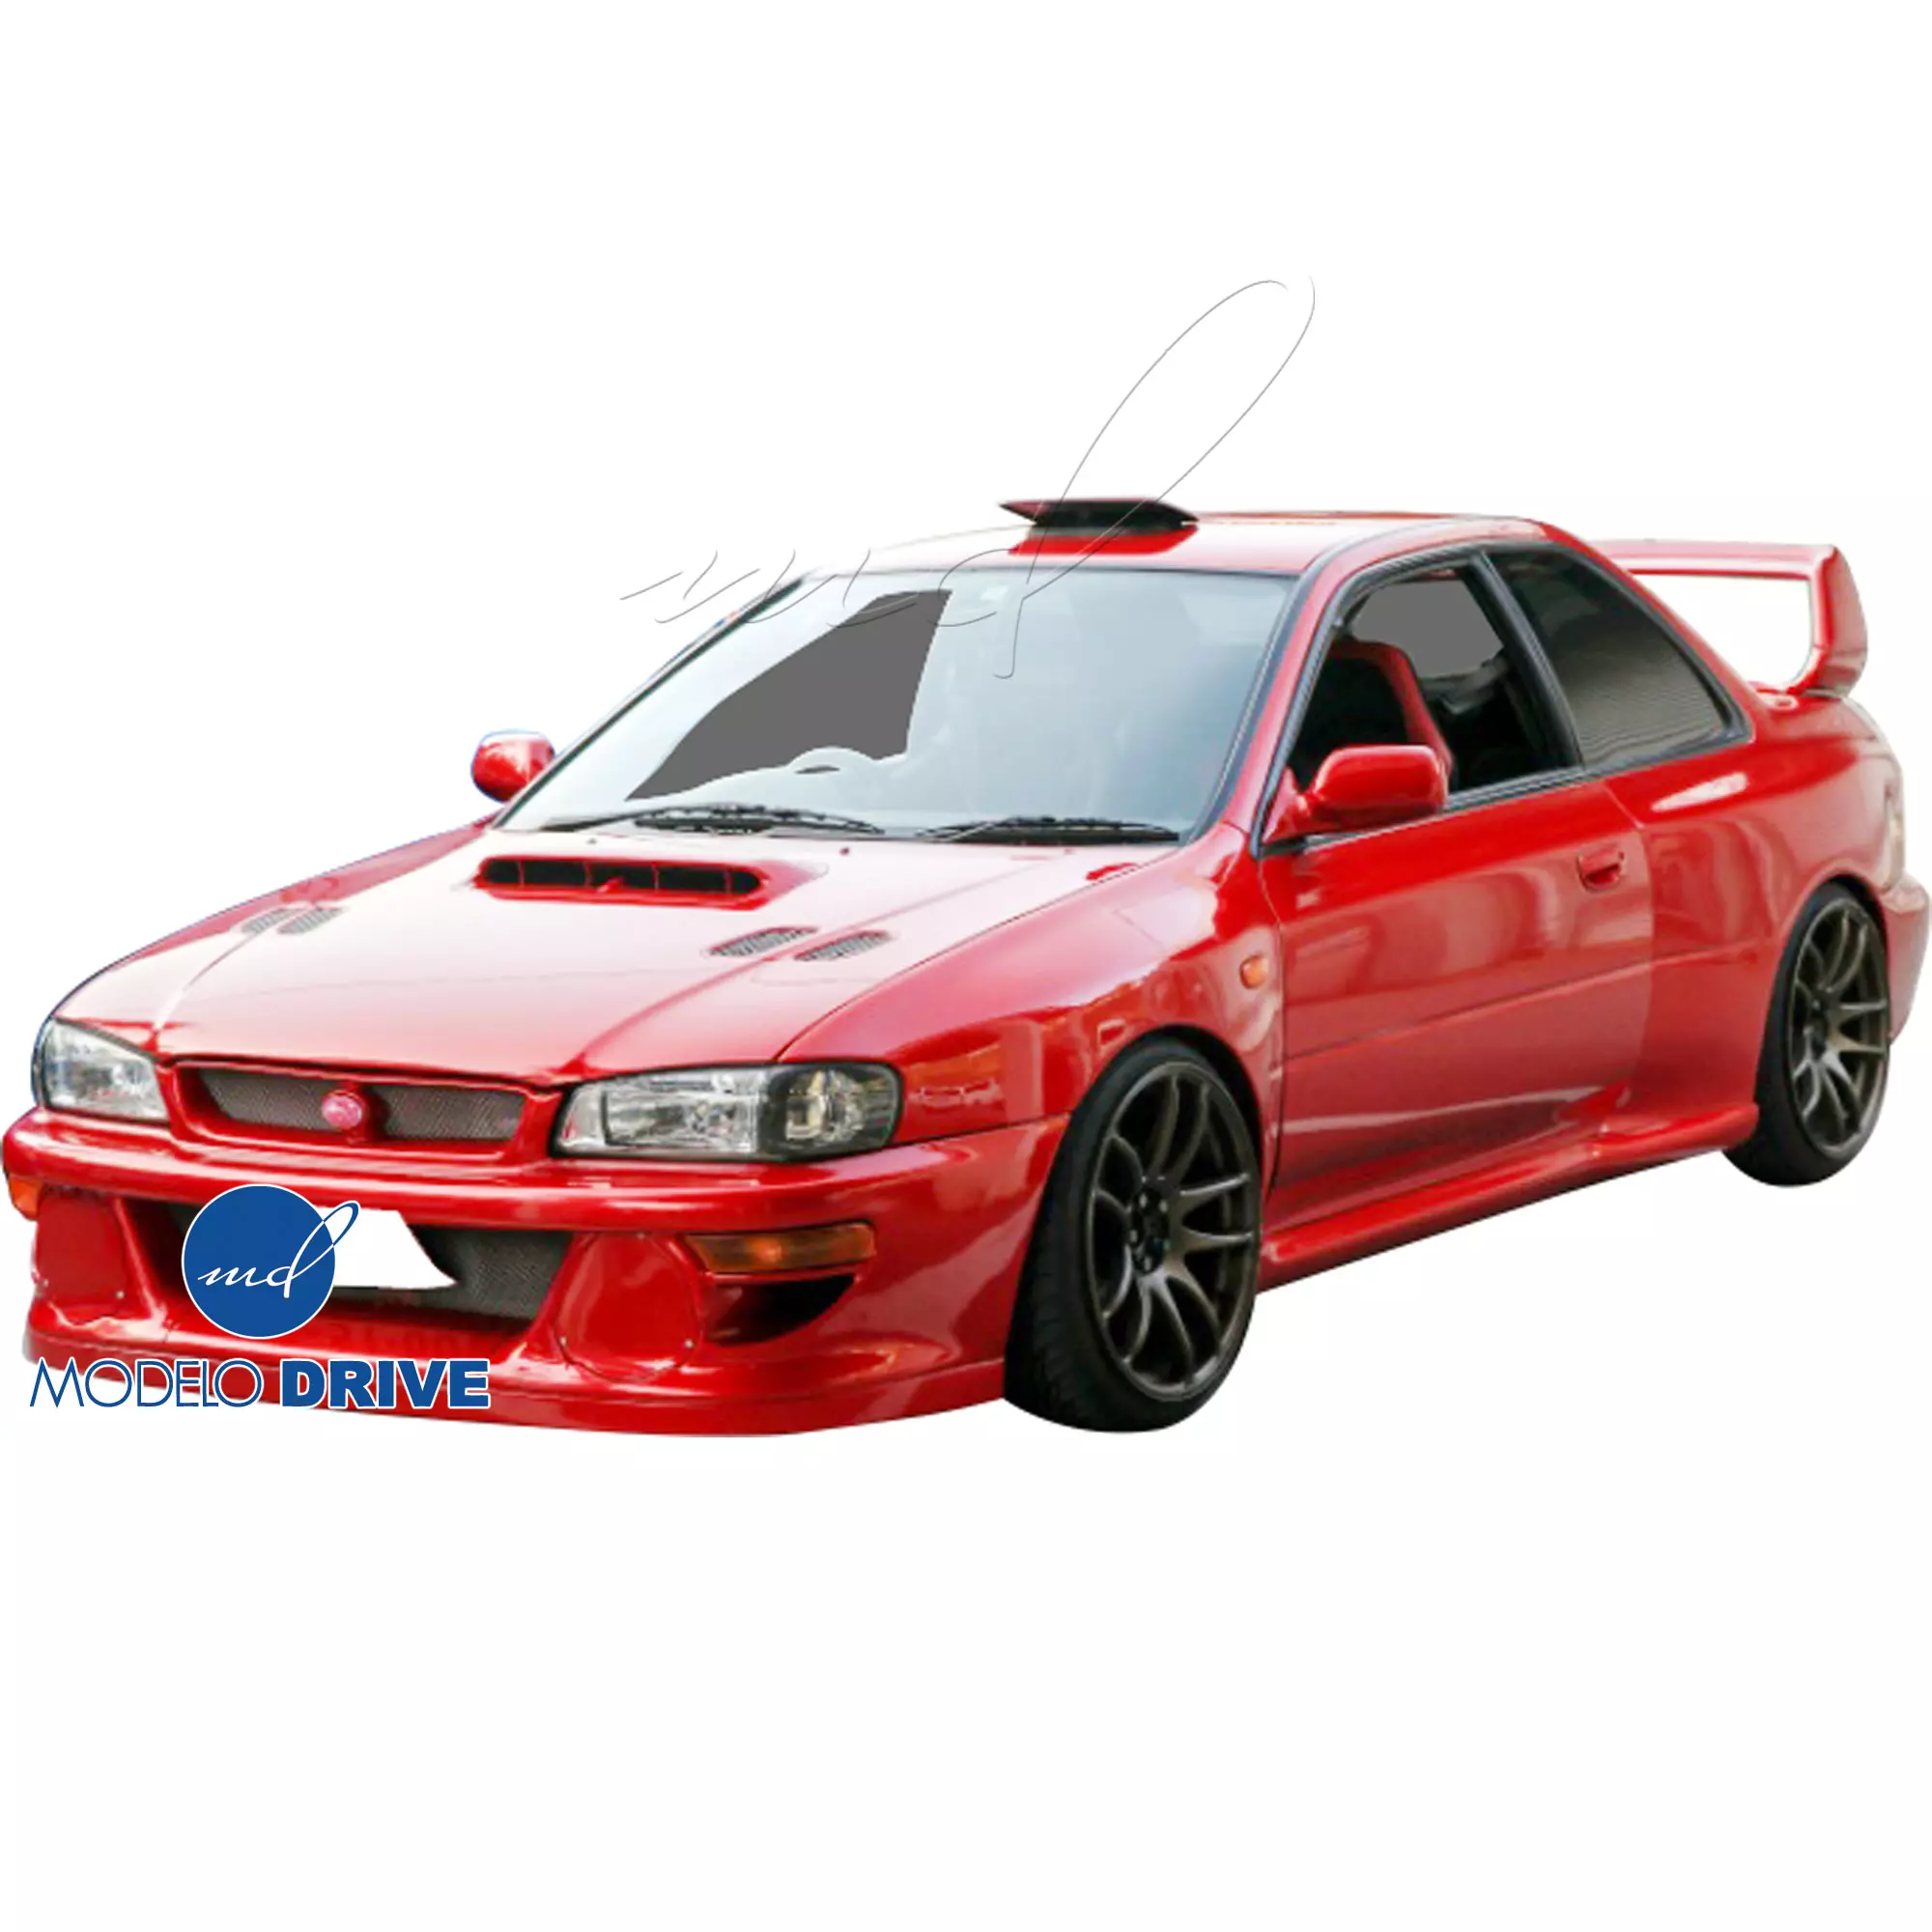 ModeloDrive FRP LS WRC 00 Wide Body Kit 11pc > Subaru Impreza (GC8) 1993-2001 > 2dr Coupe - Image 80